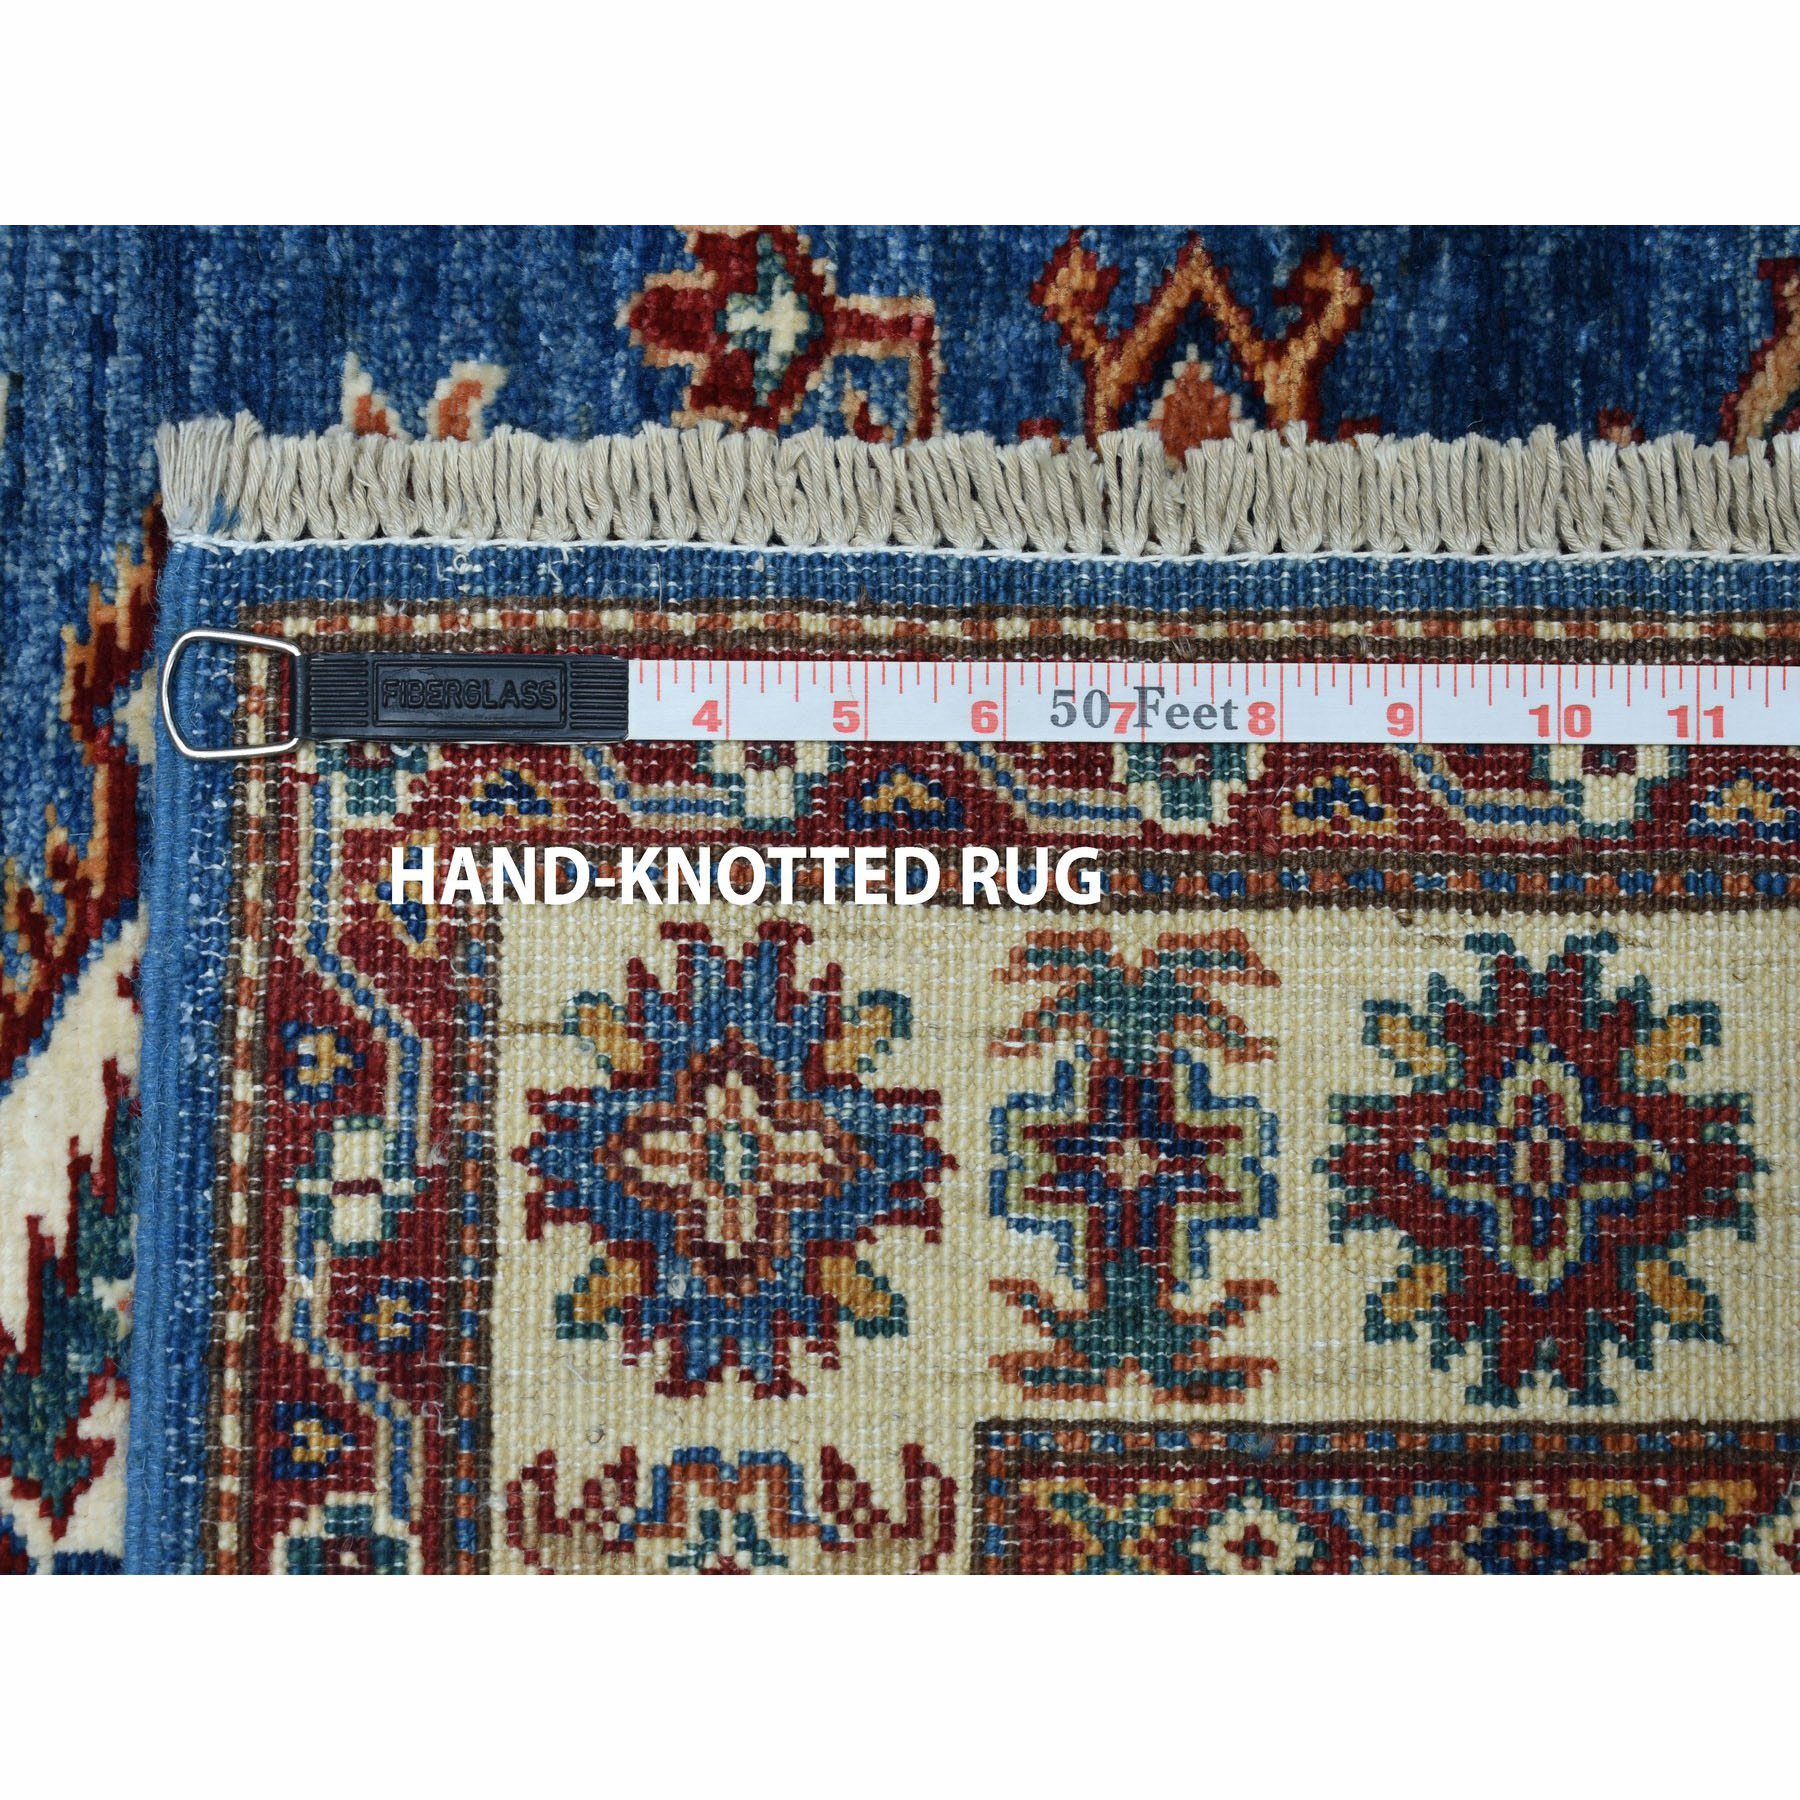 3-2 x4-8  Blue Super Kazak Pure Wool Geometric Design Hand-Knotted Oriental Rug 